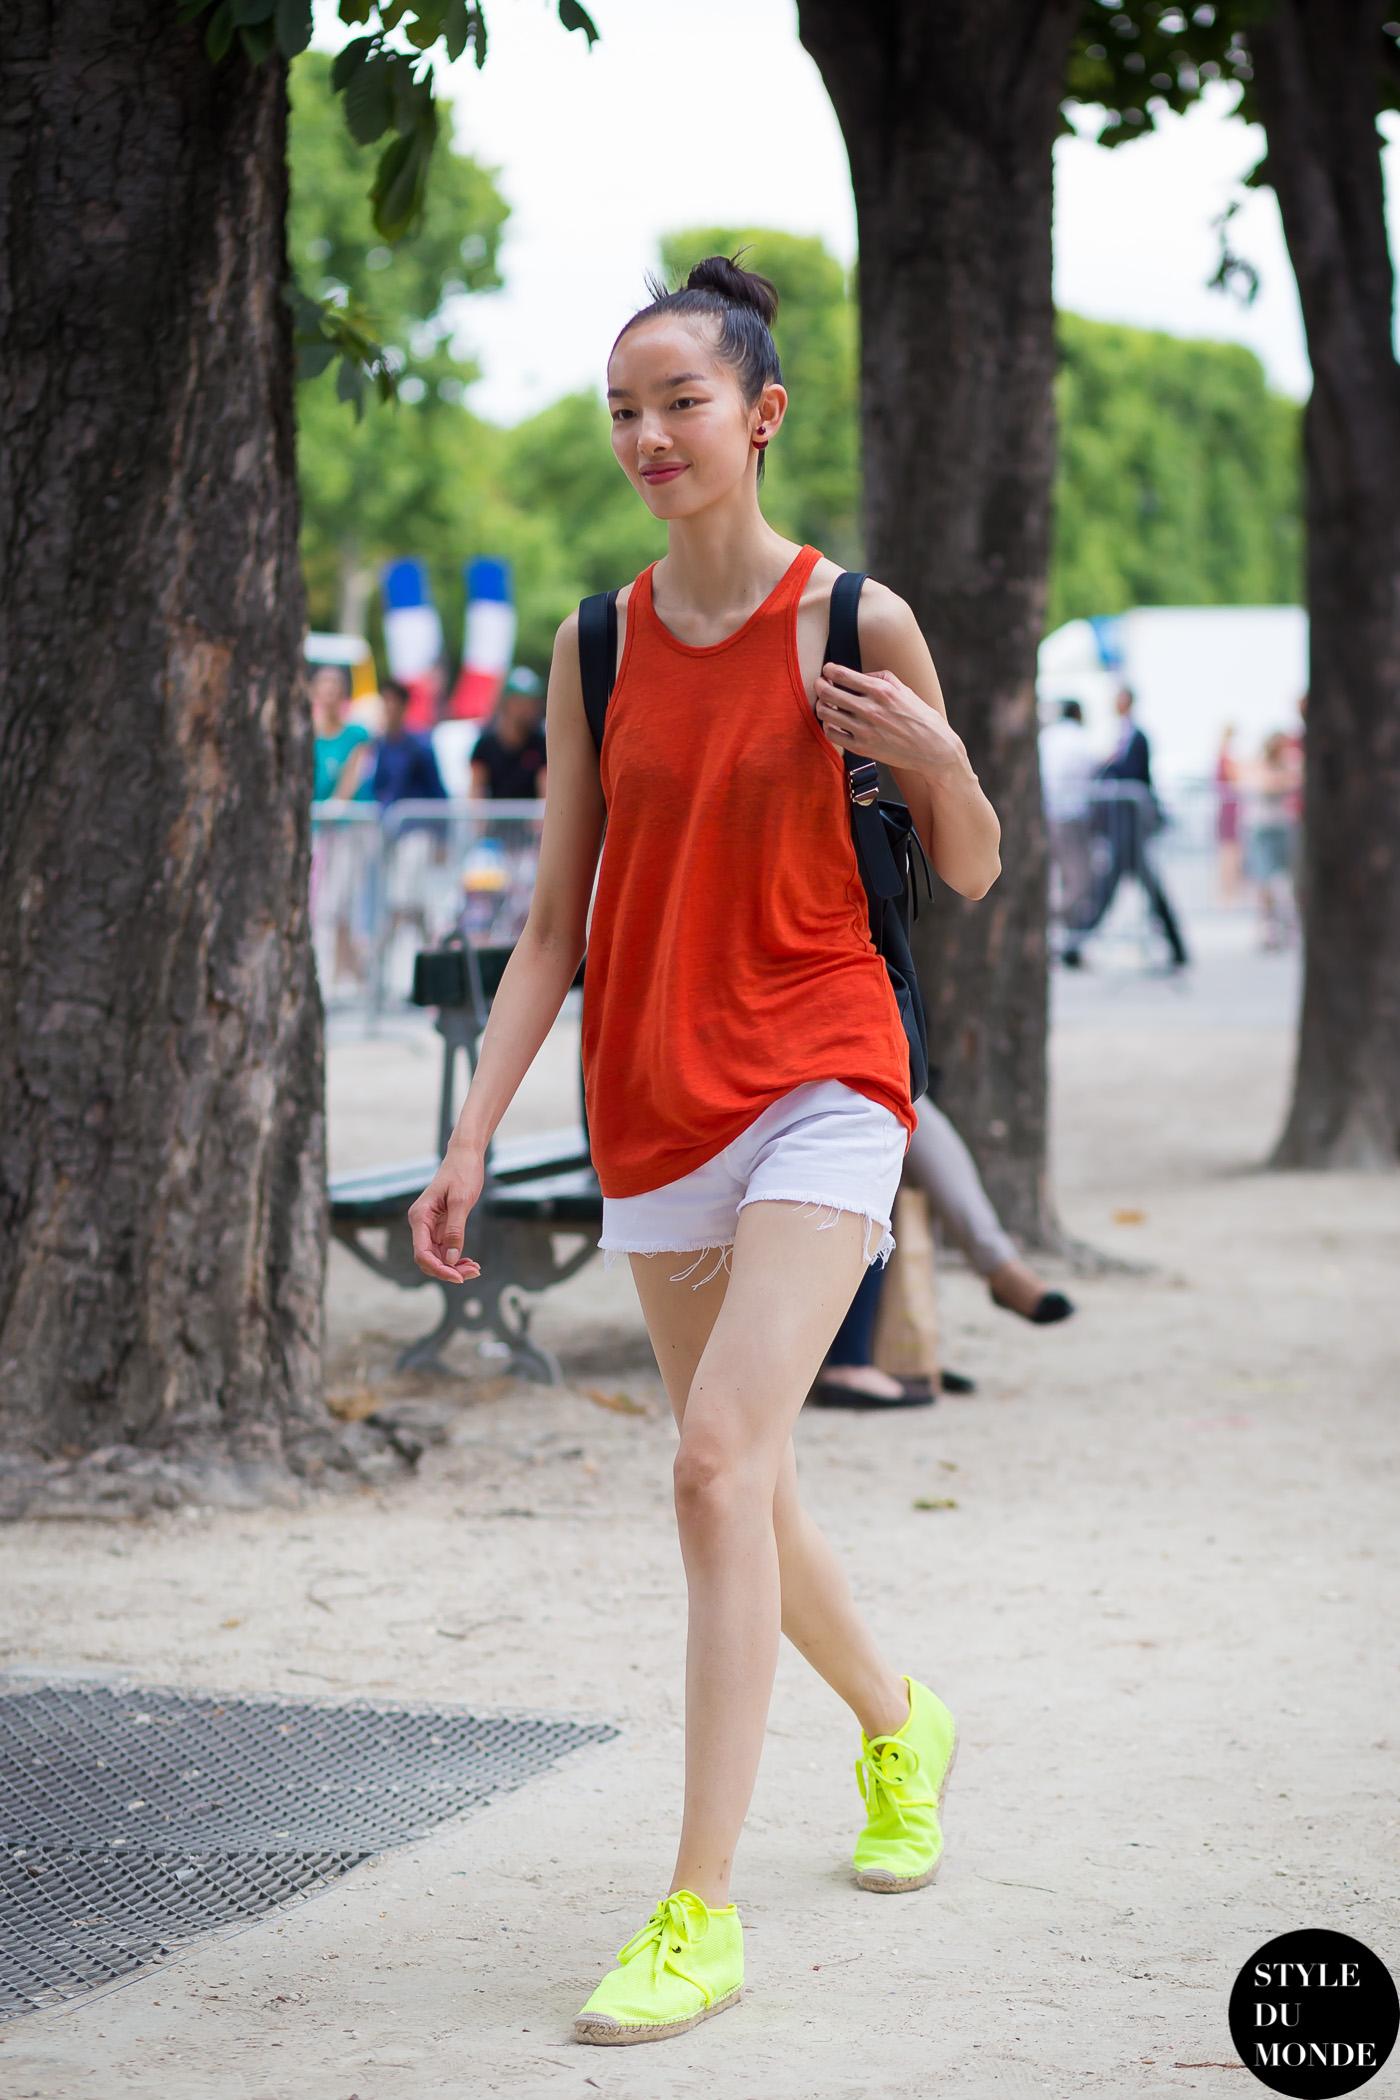 Fei Fei Sun DU MONDE. Street Style Street Fashion Photo